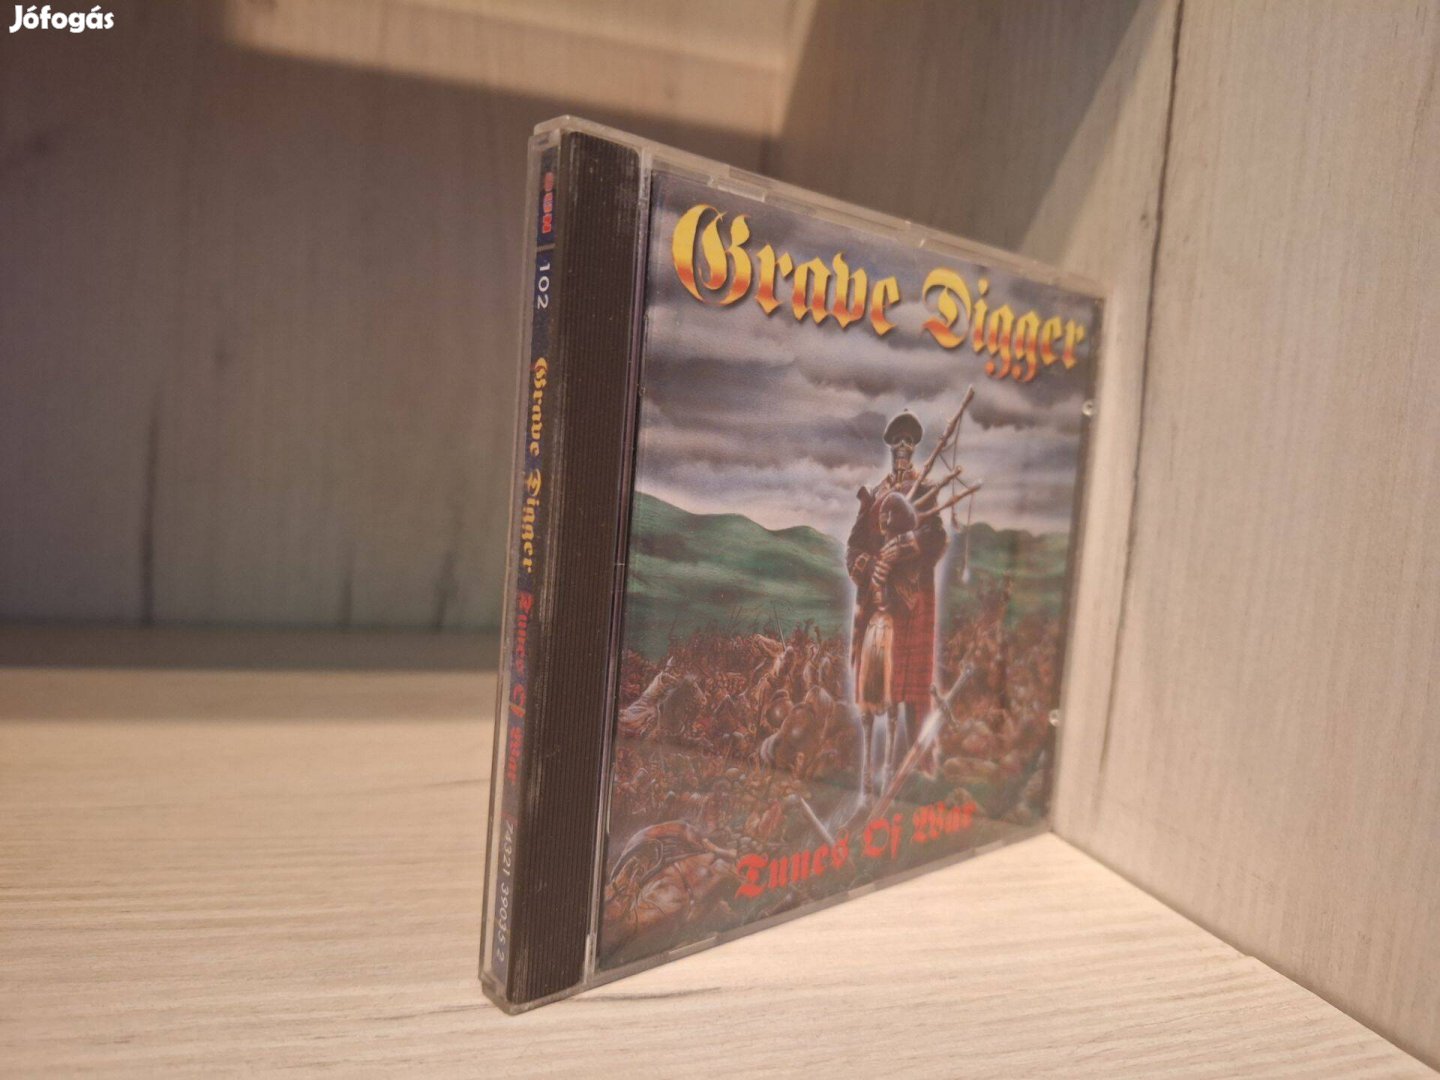 Grave Digger - Tunes Of War CD